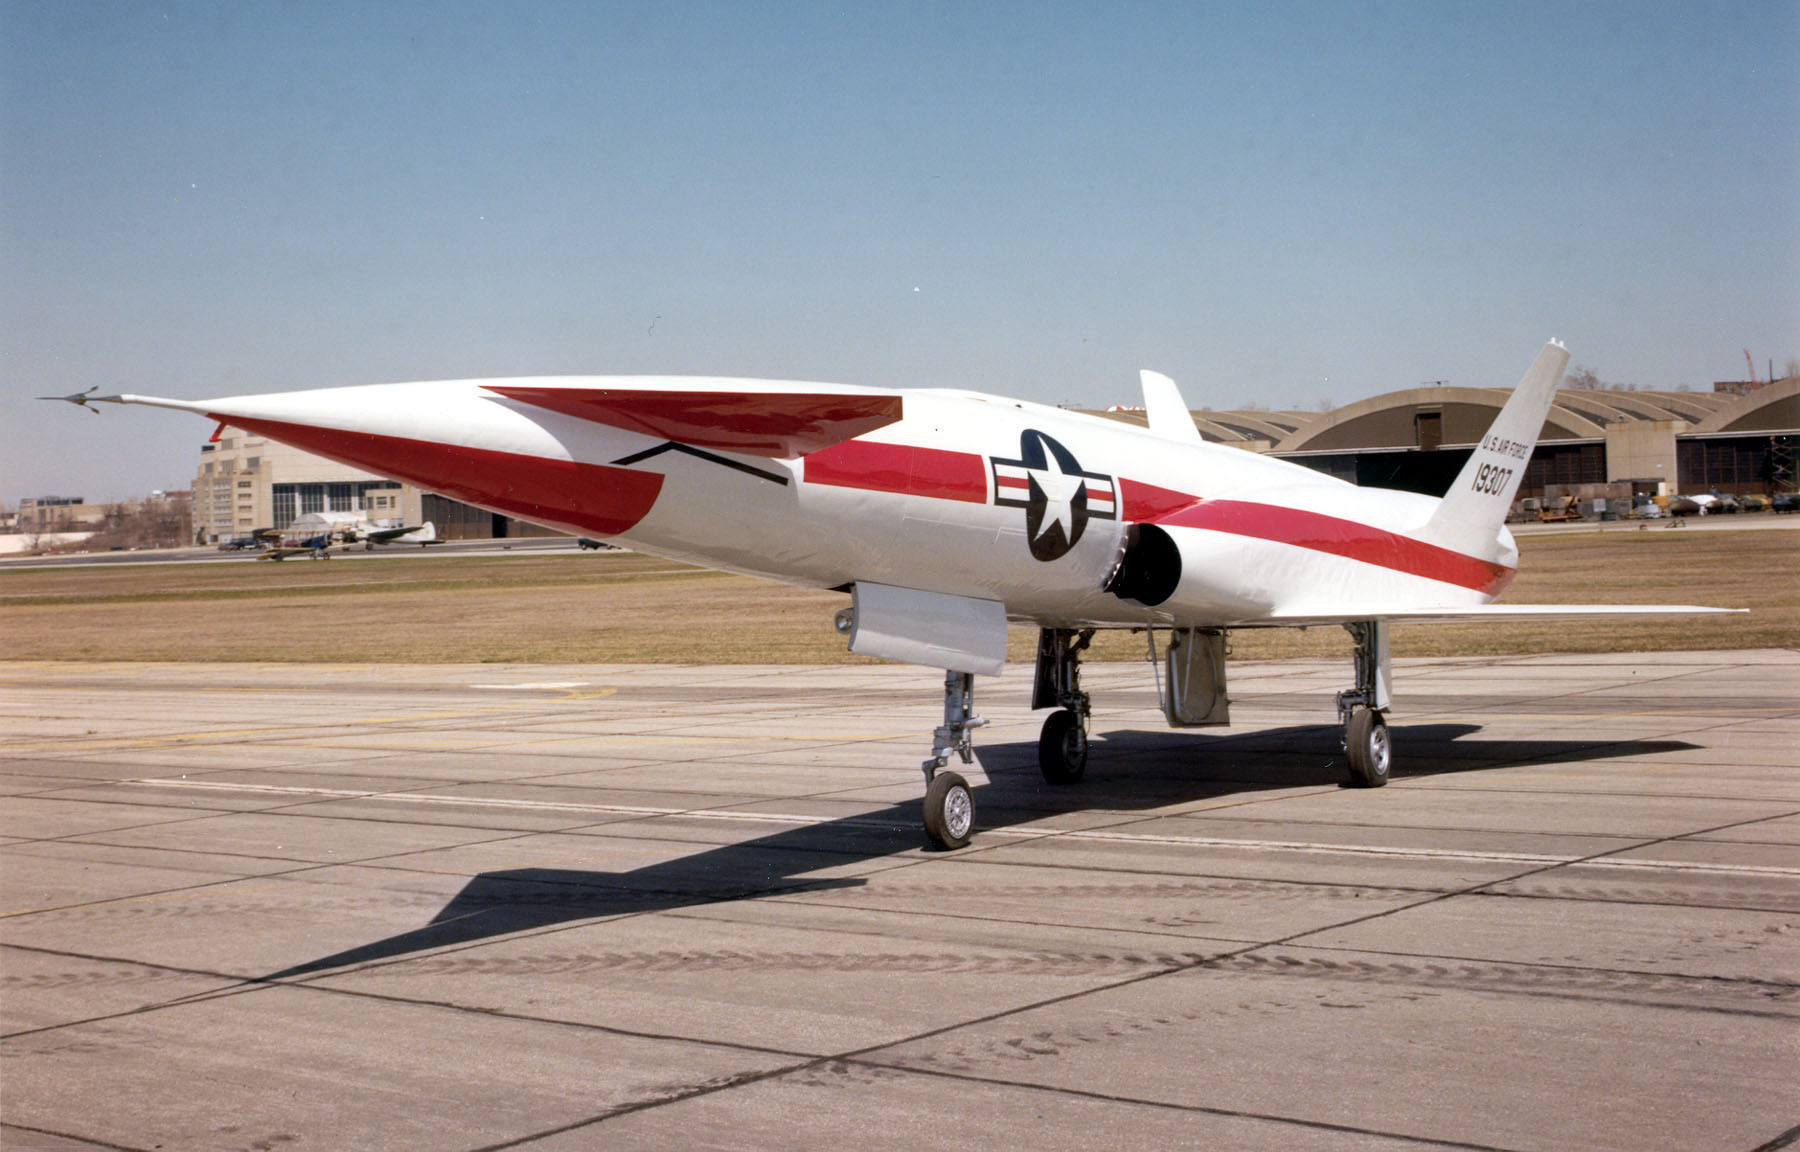 The North American X-10.